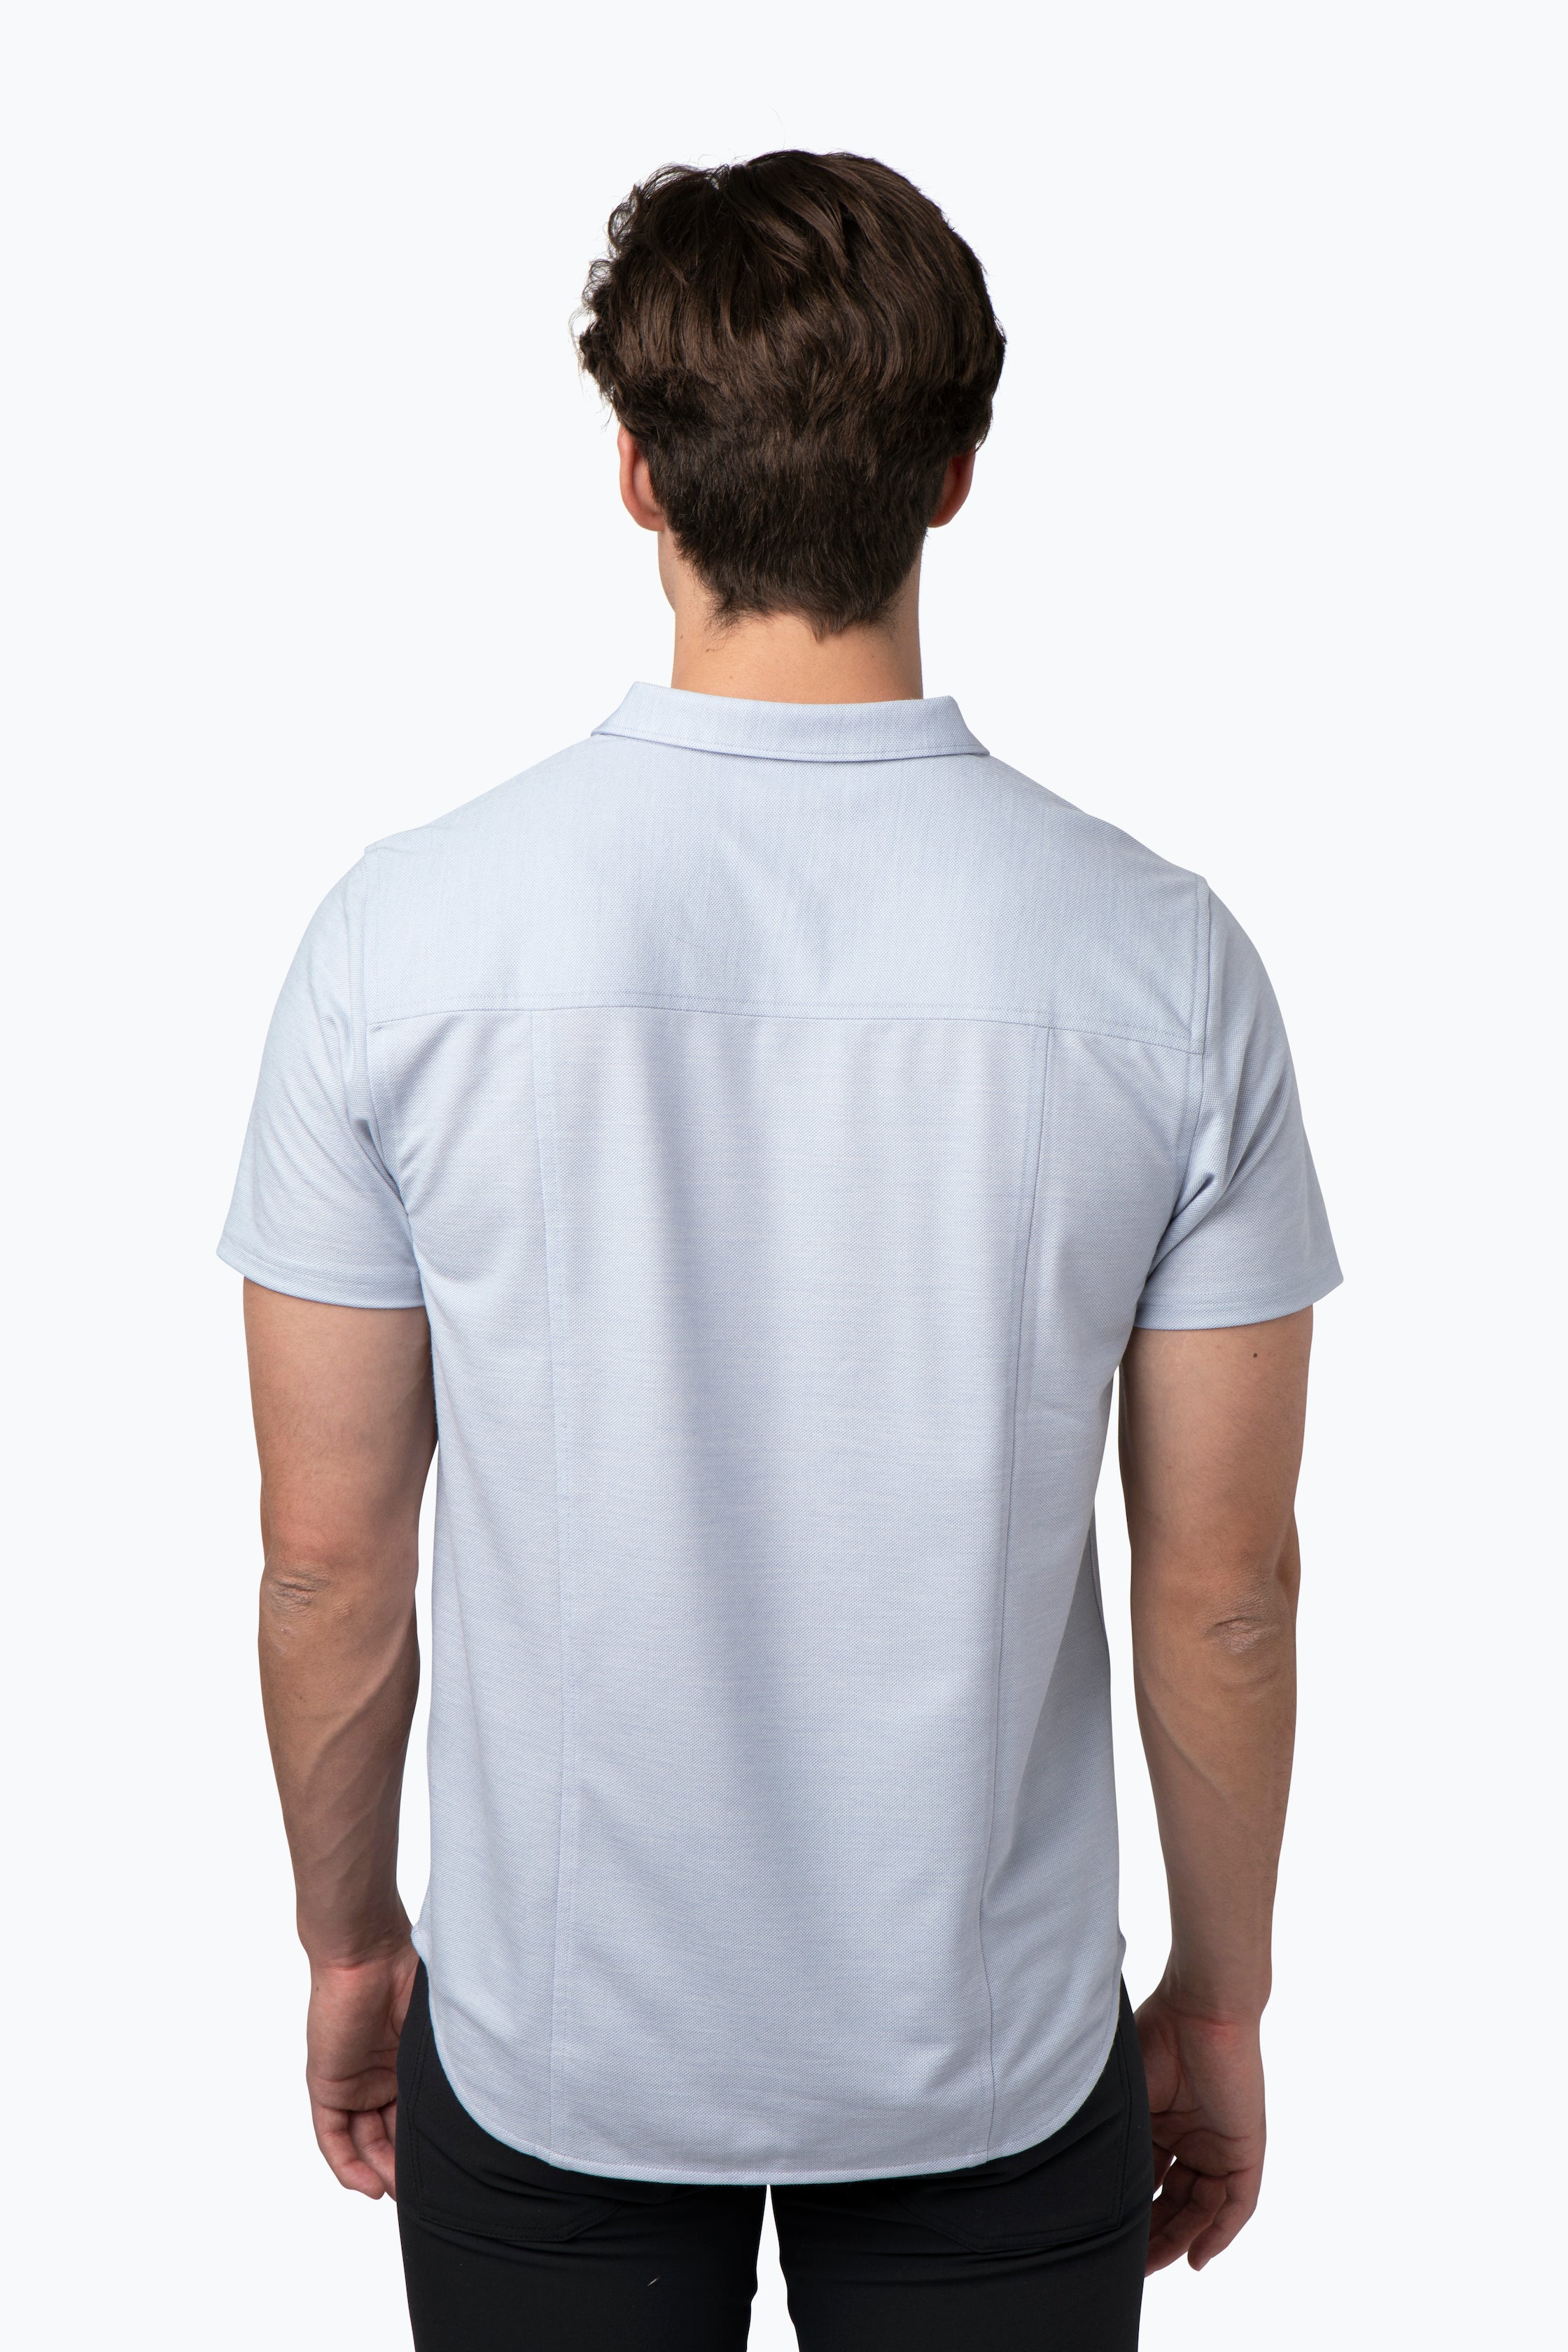 Limitless Merino Polo Shirt - Light blue
